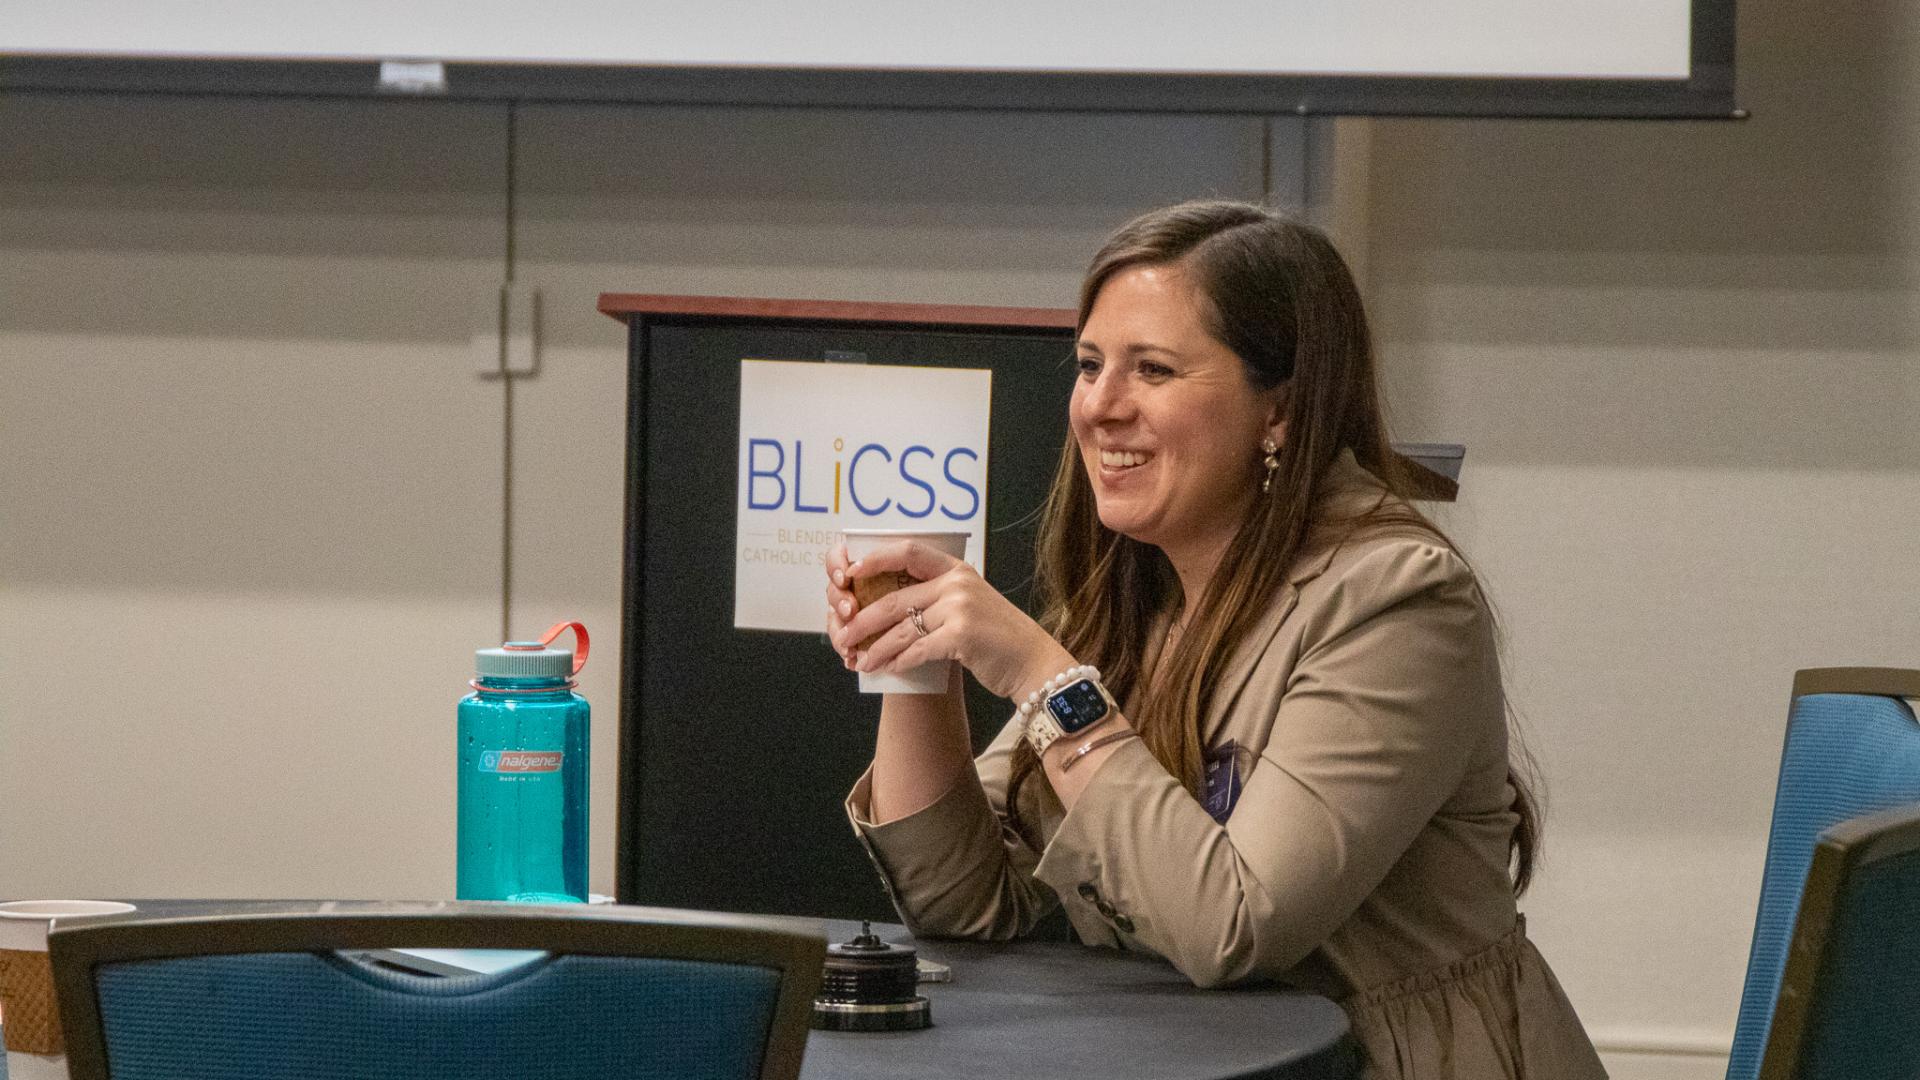 Megan Cerbins presenting at BLiCSS 7.0